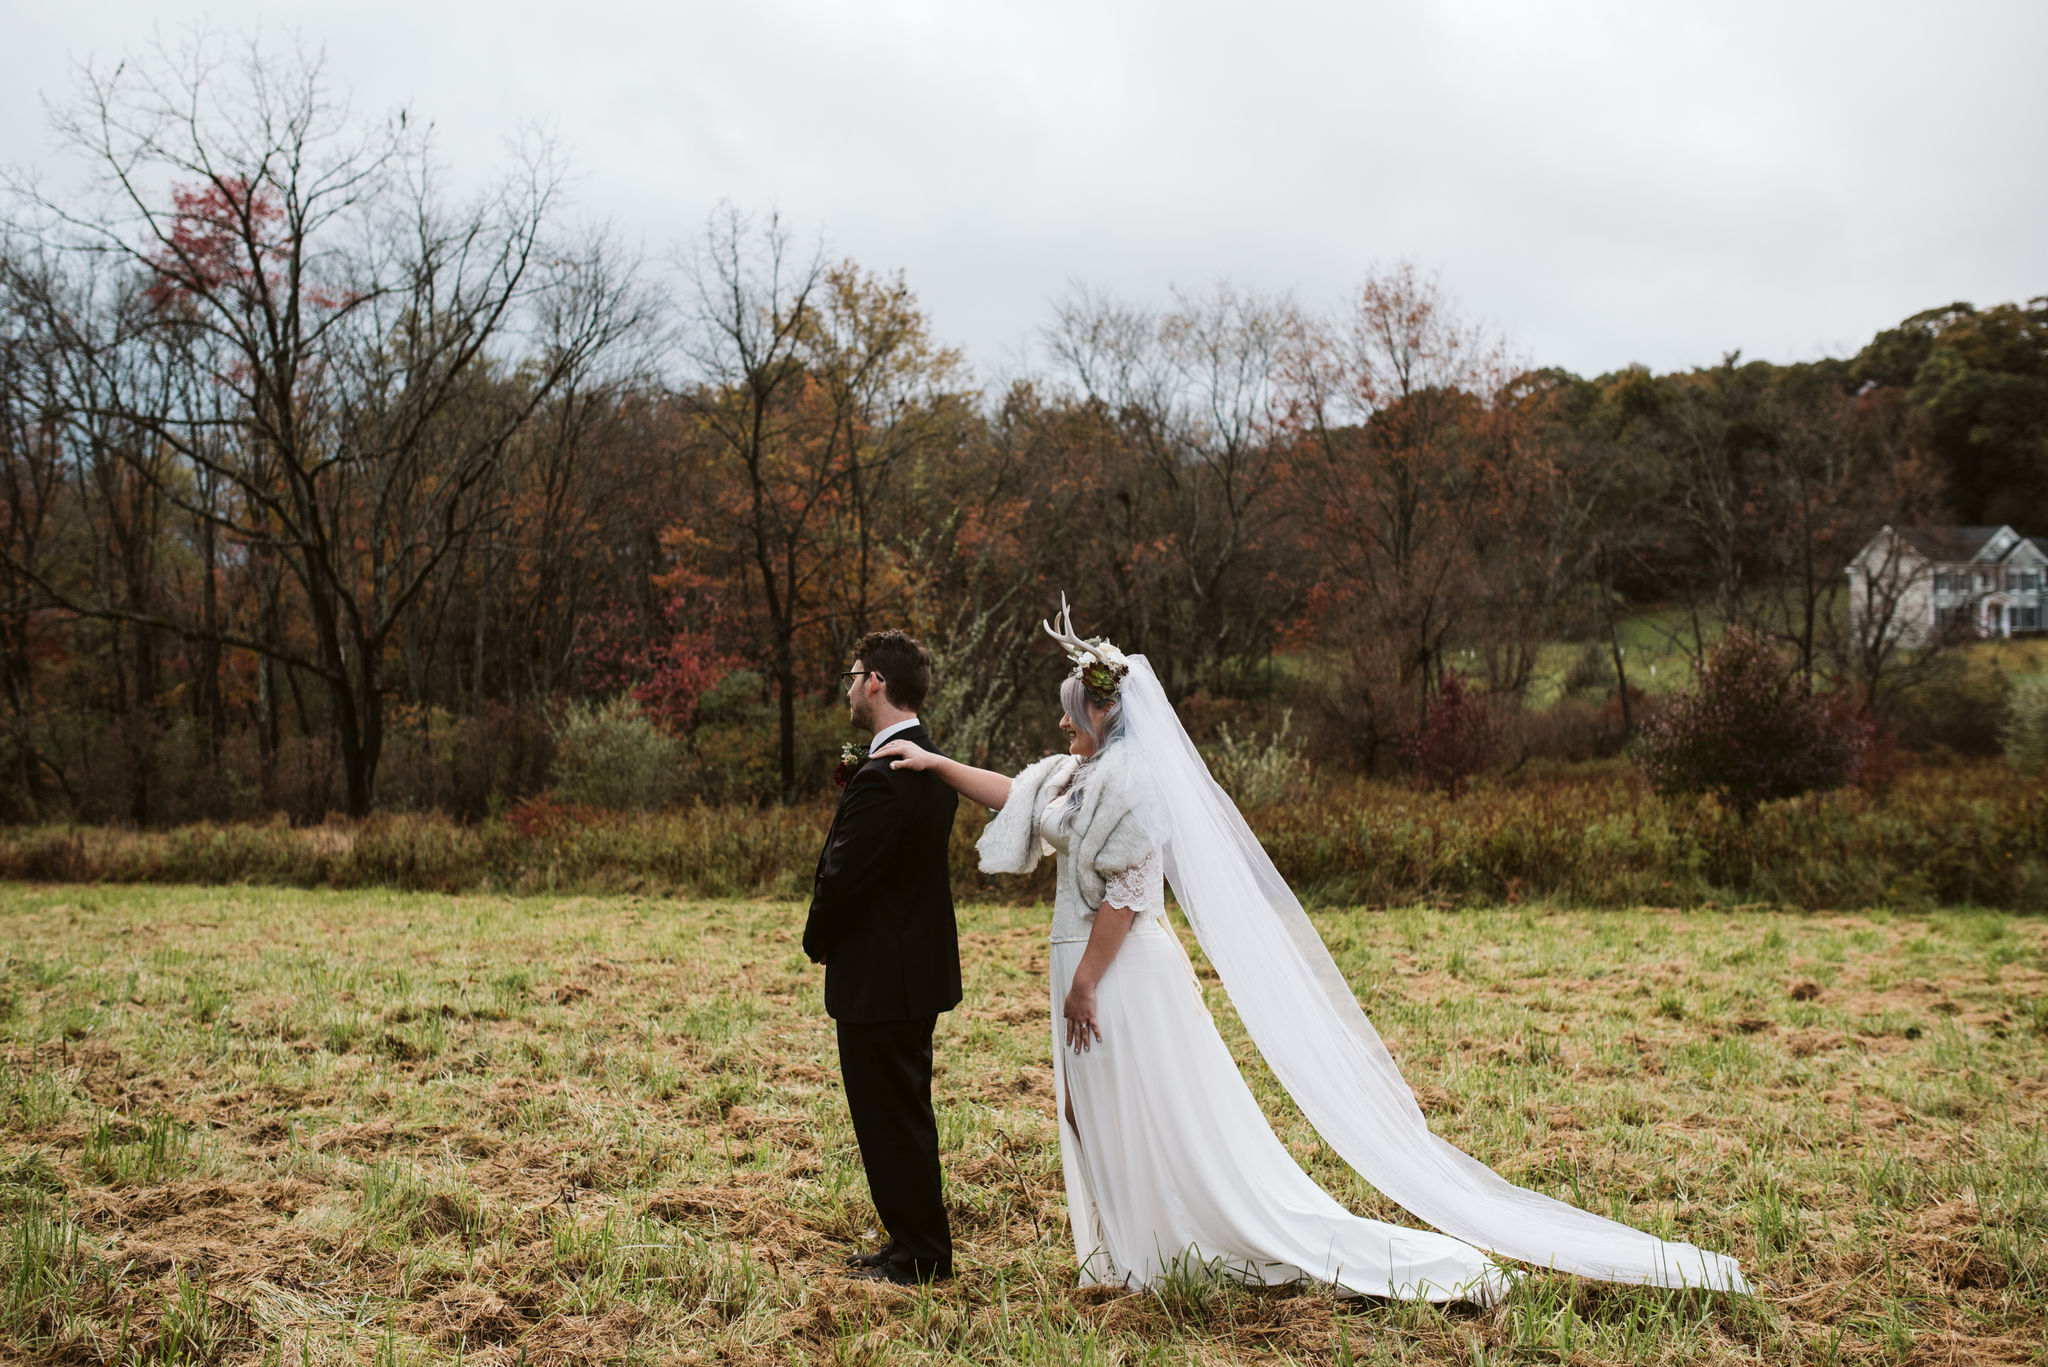  Maryland, Baltimore Wedding Photographer, Backyard Wedding, Fall, October, Dark Bohemian, Whimsical, Fun, First Look 